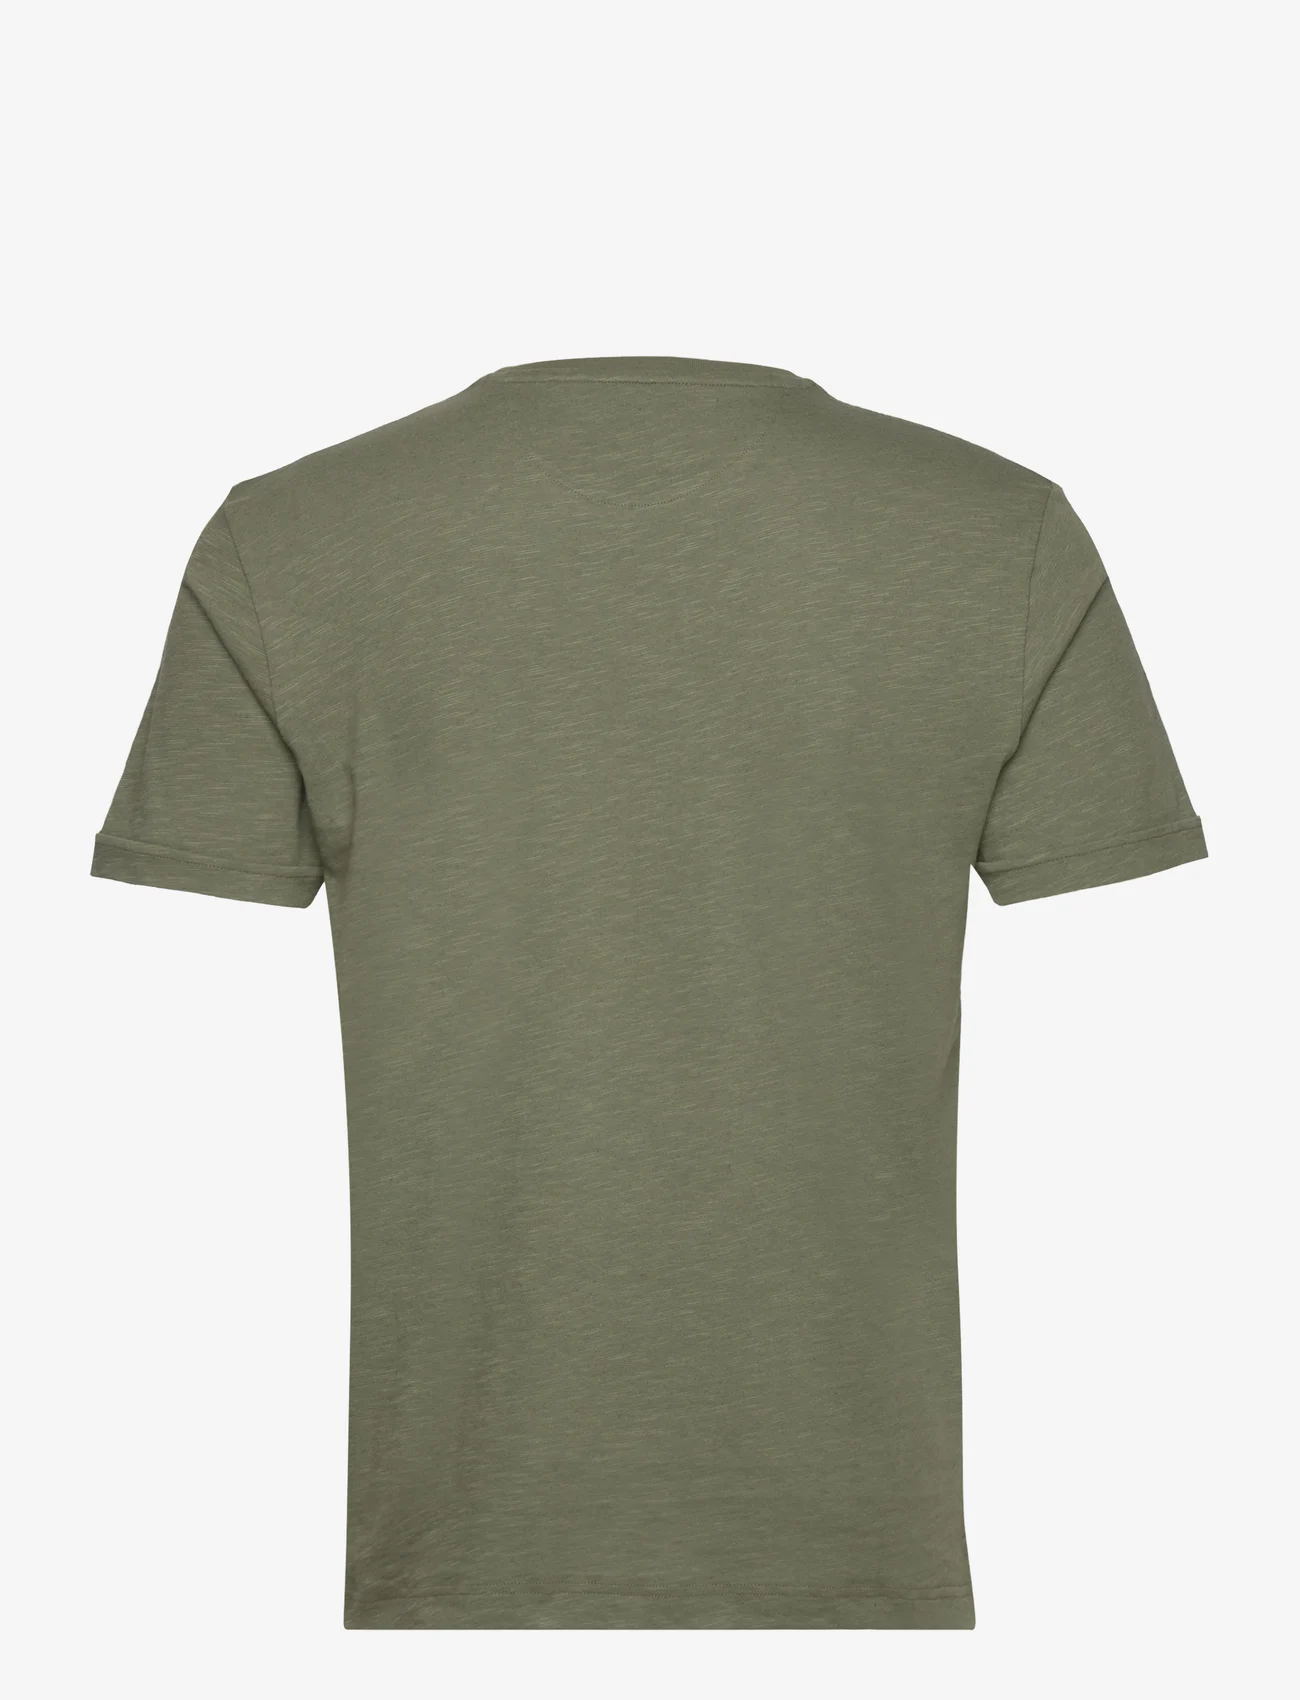 Hackett London - CTN LINEN POCKET TEE - basic t-shirts - olive green - 1